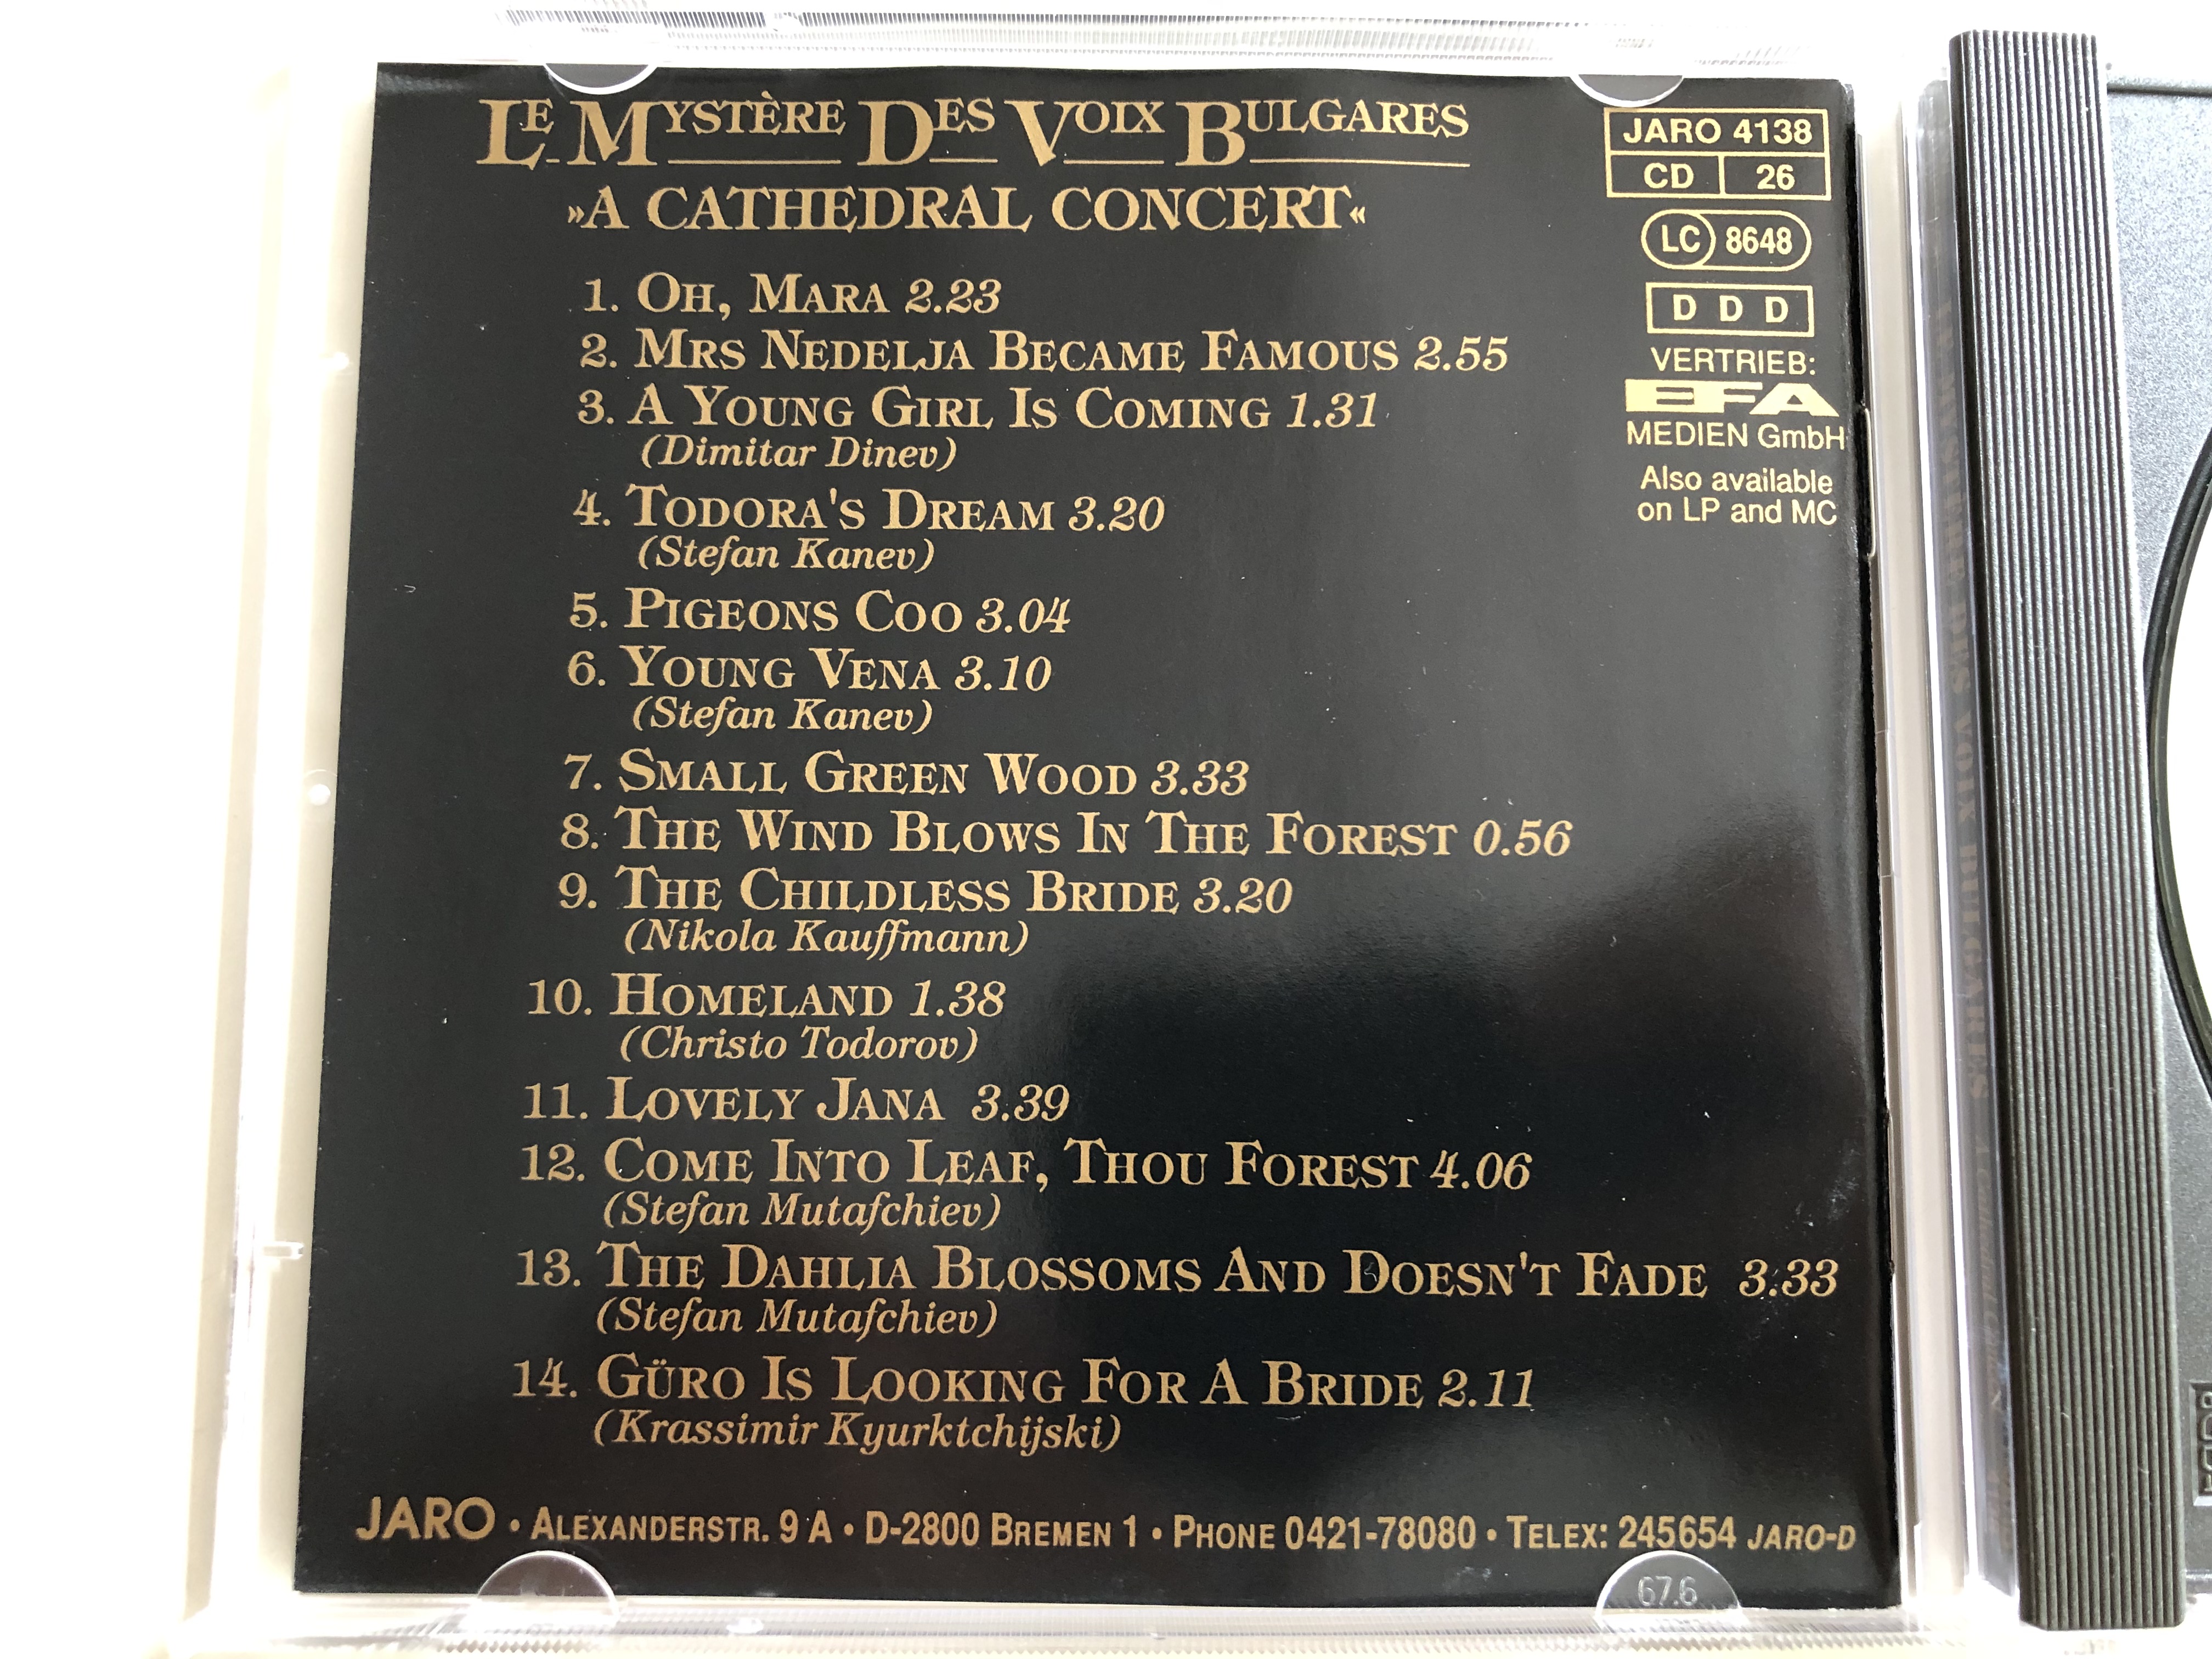 le-myst-re-des-voix-bulgares-a-cathedral-concert-jaro-audio-cd-1988-jaro-04138-5-.jpg